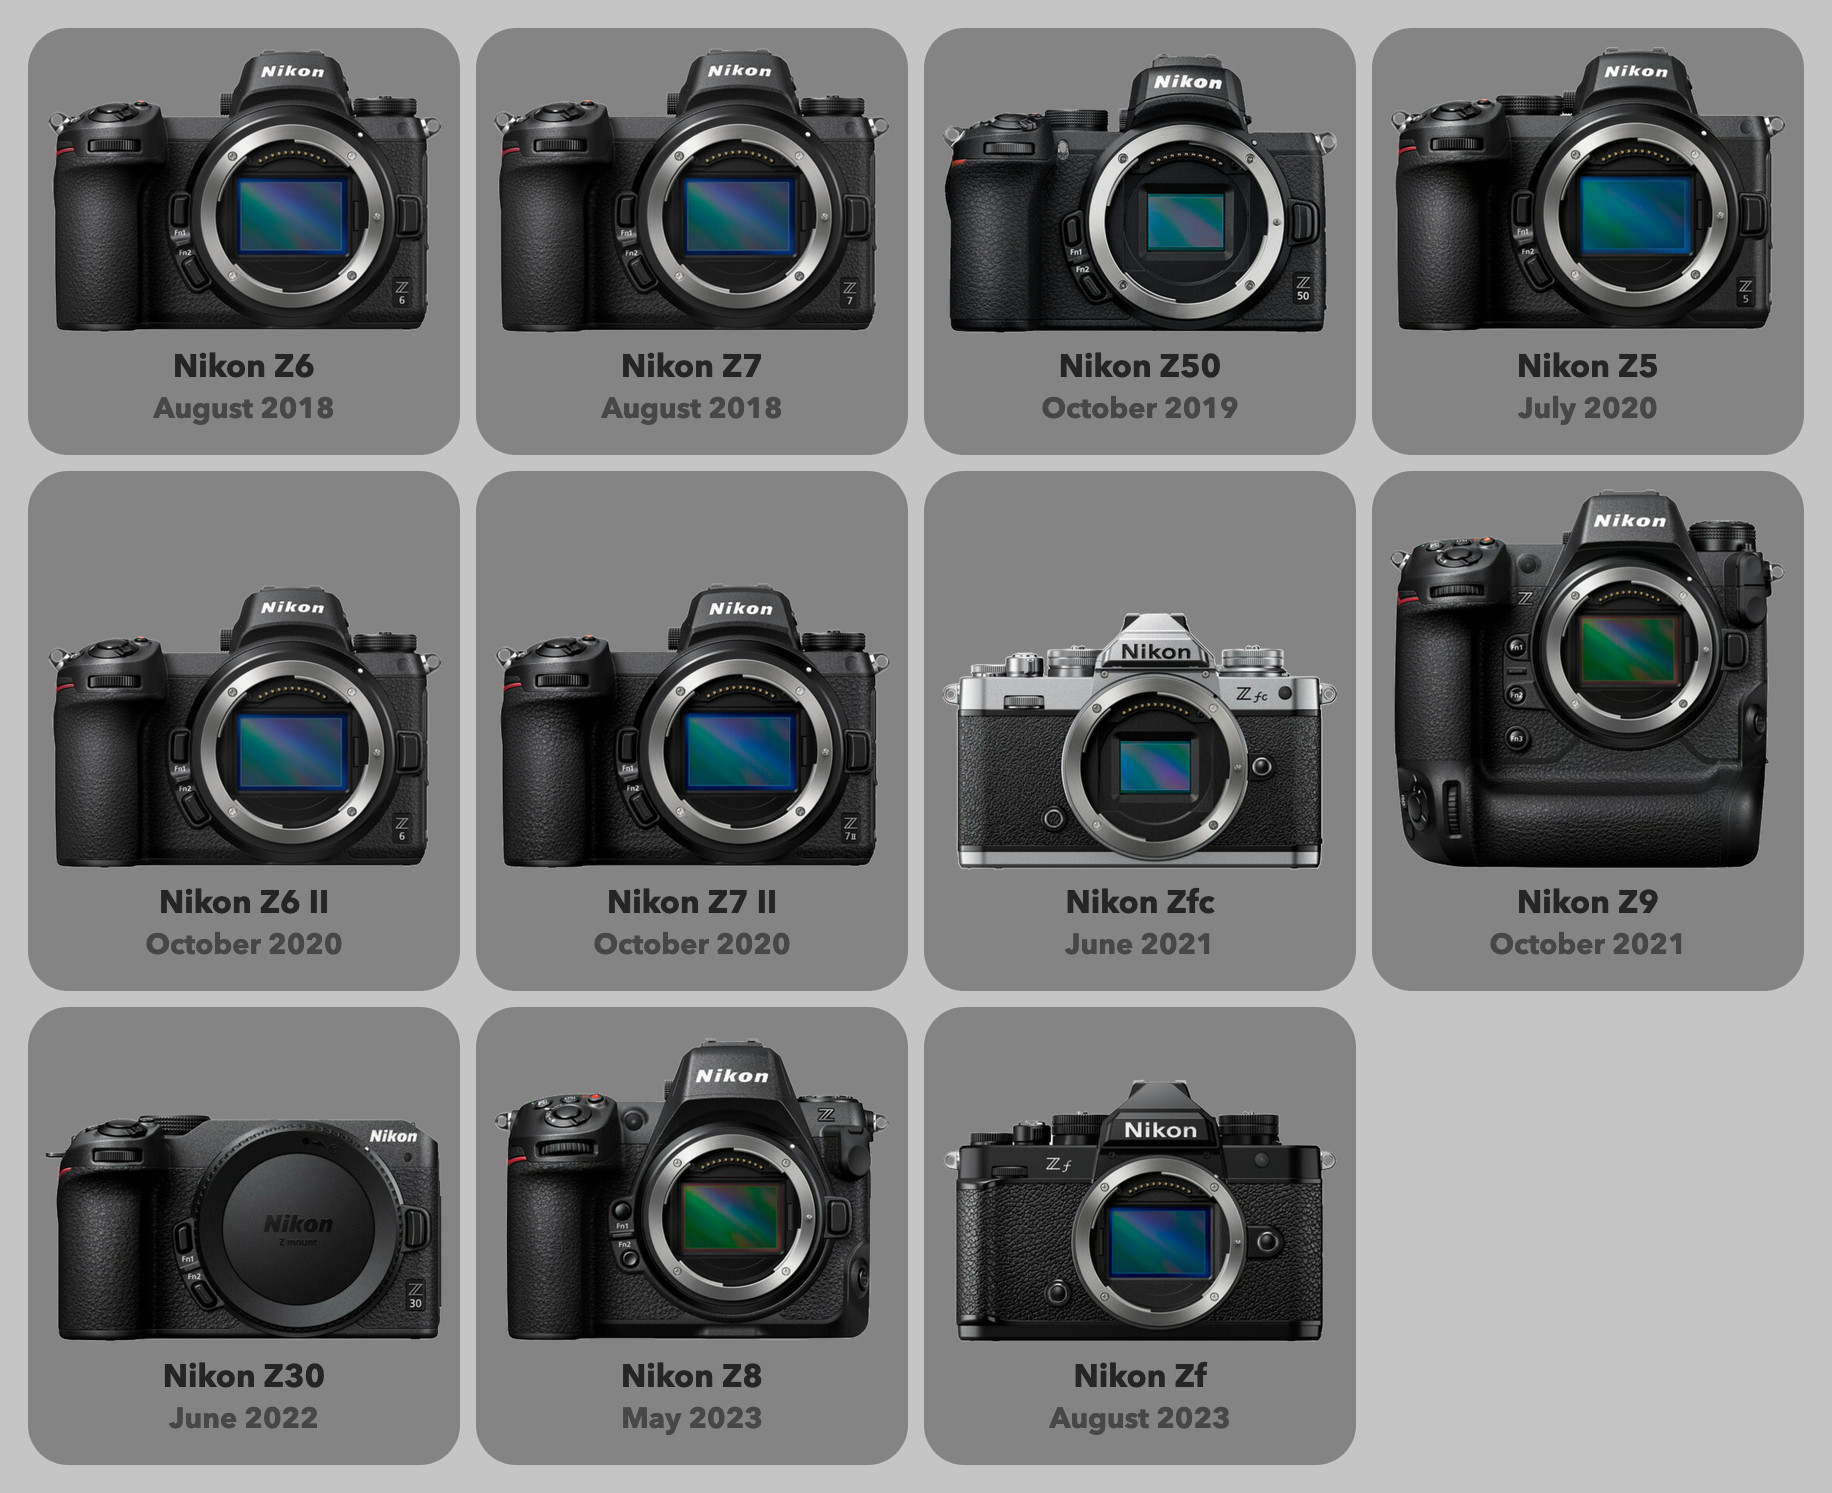 Nikon Zf vs Z6 II - The 10 Main Differences - Mirrorless Comparison